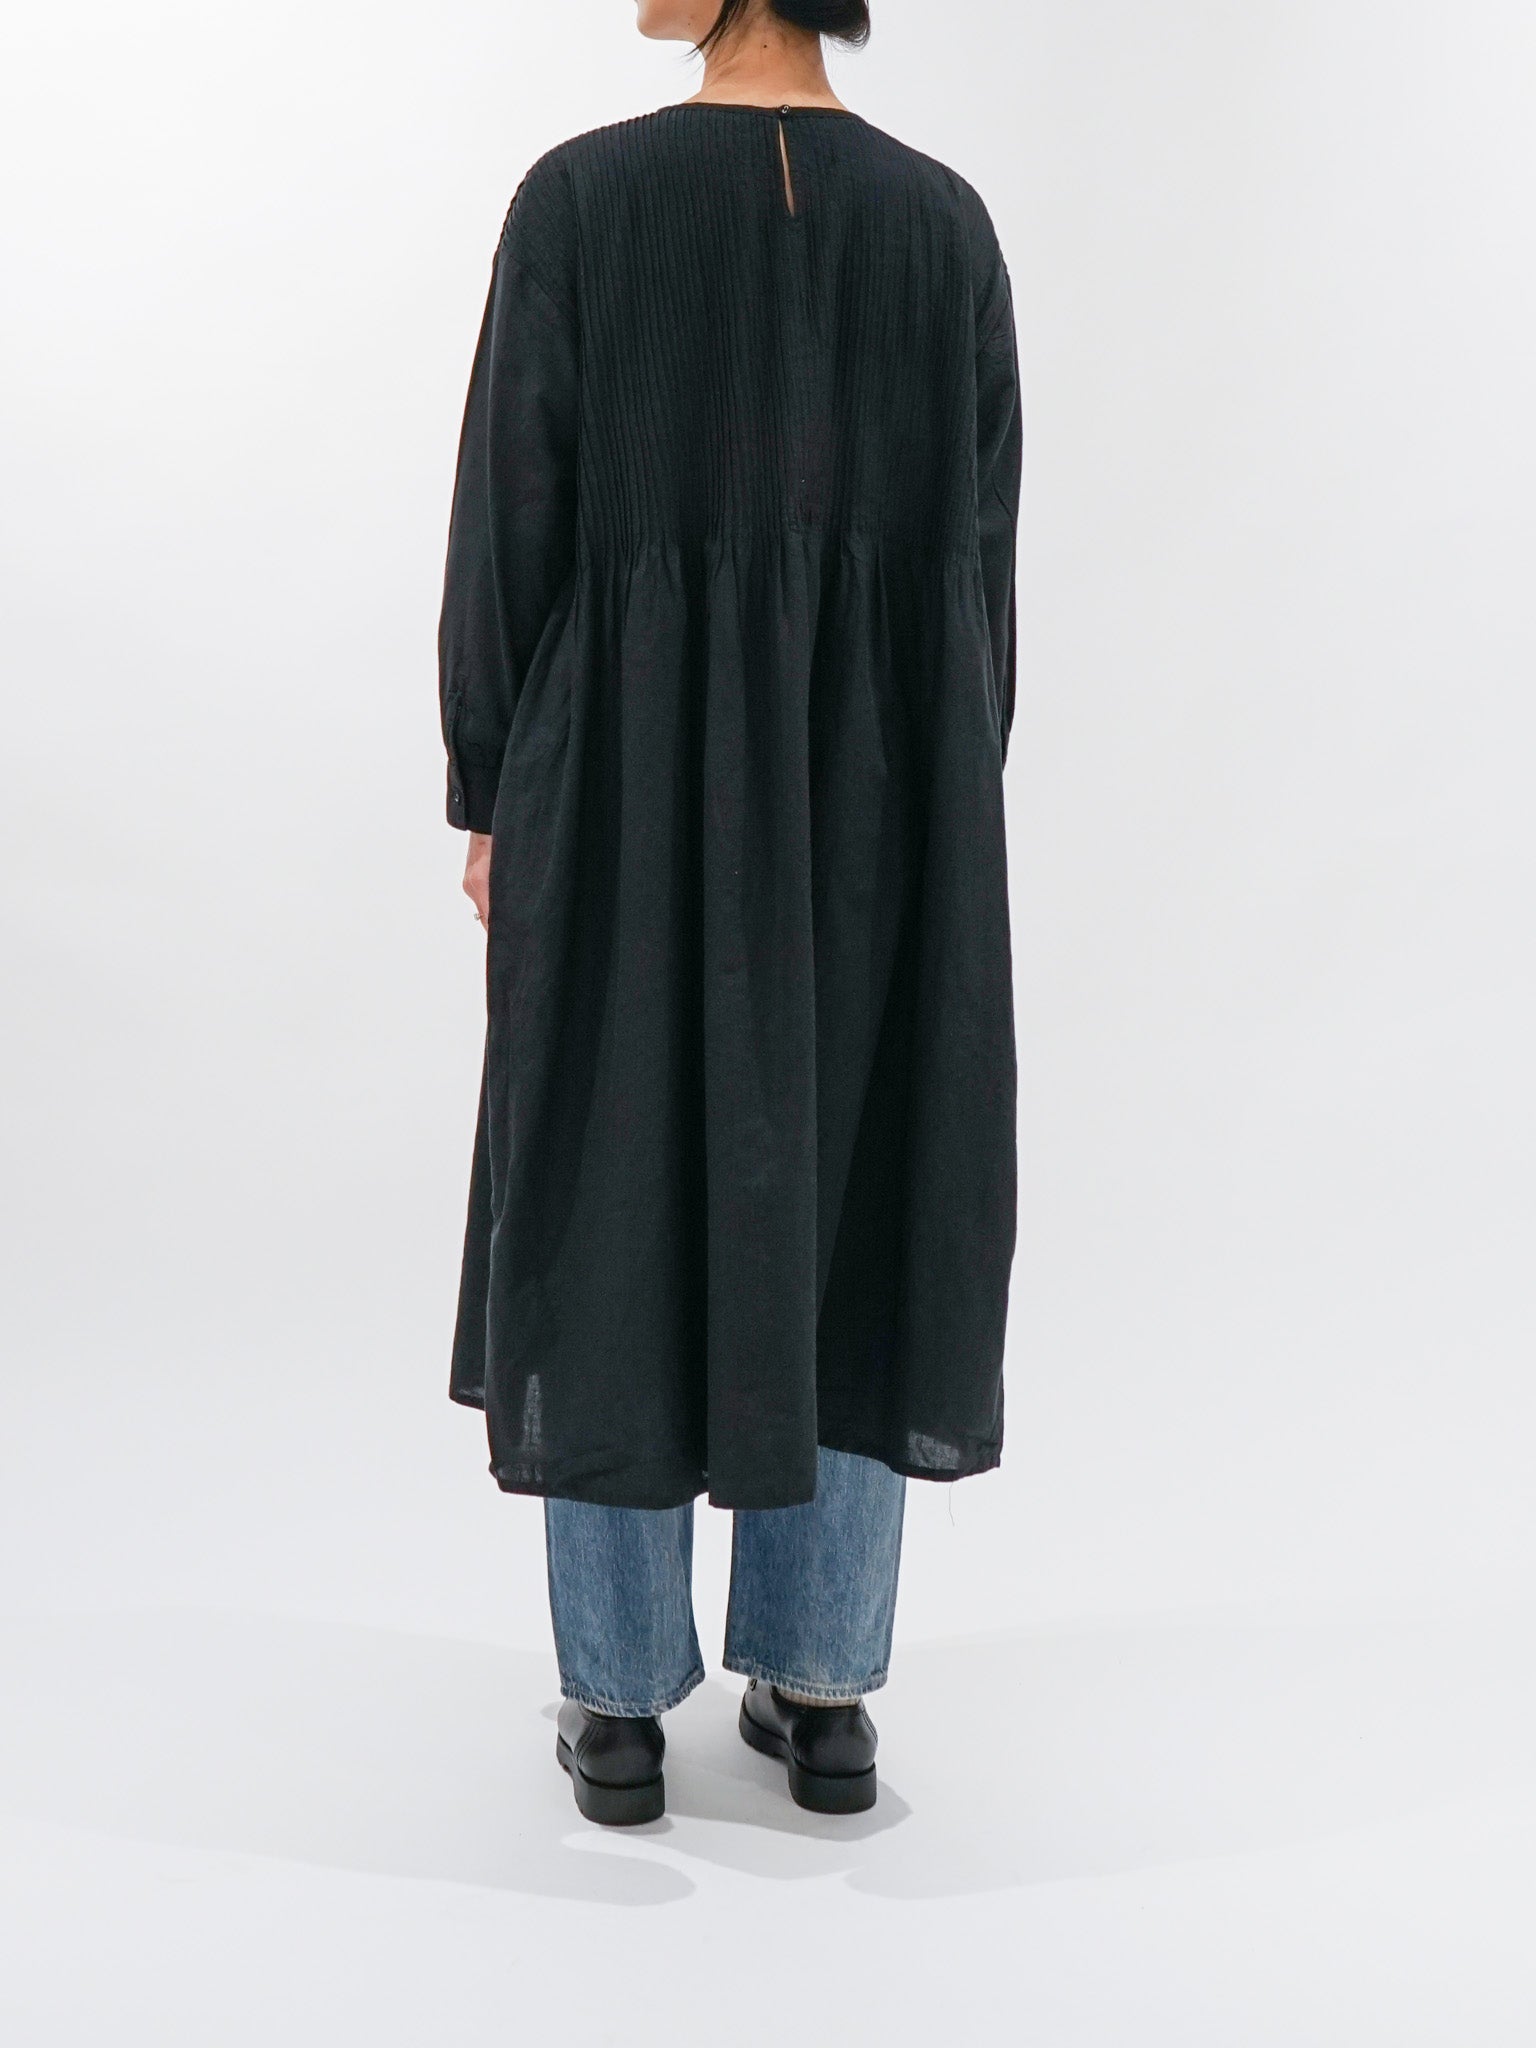 Namu Shop - ICHI Pintuck Dress - Black